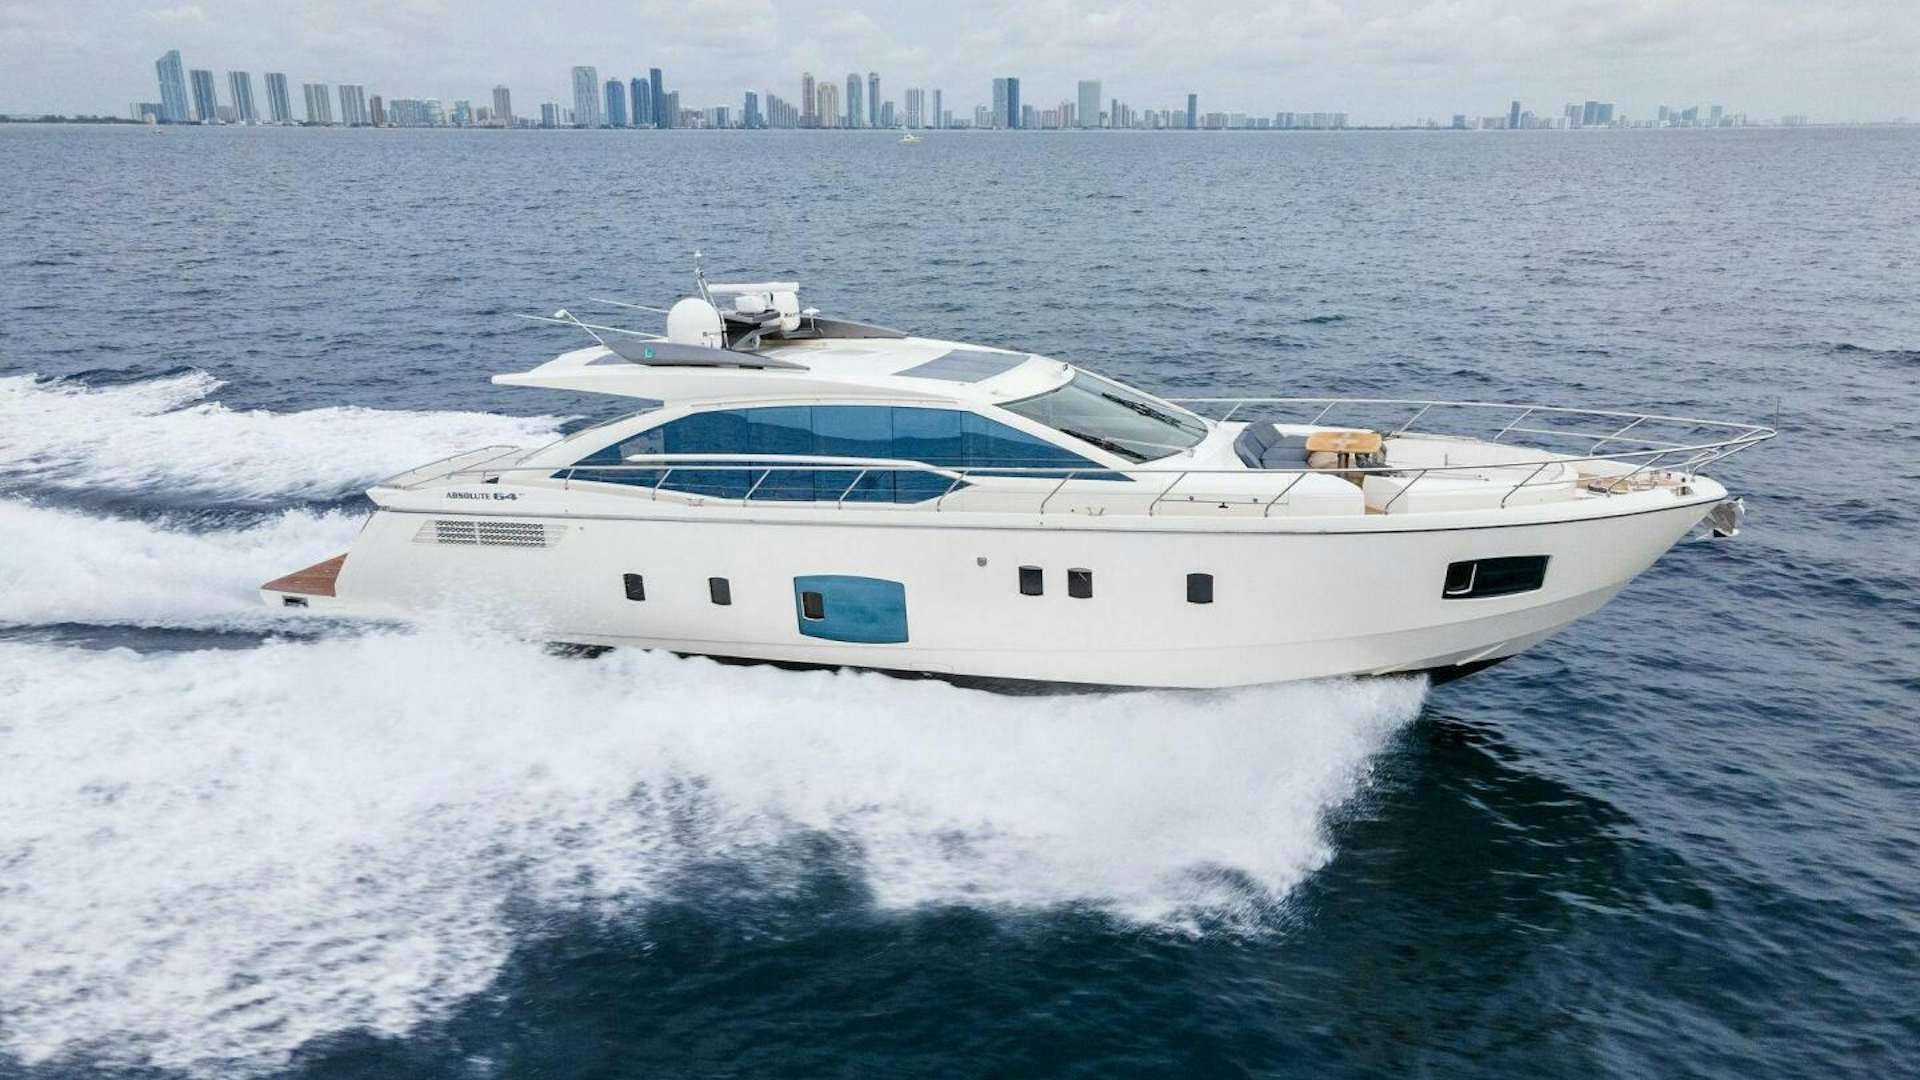 Blue daksa
Yacht for Sale